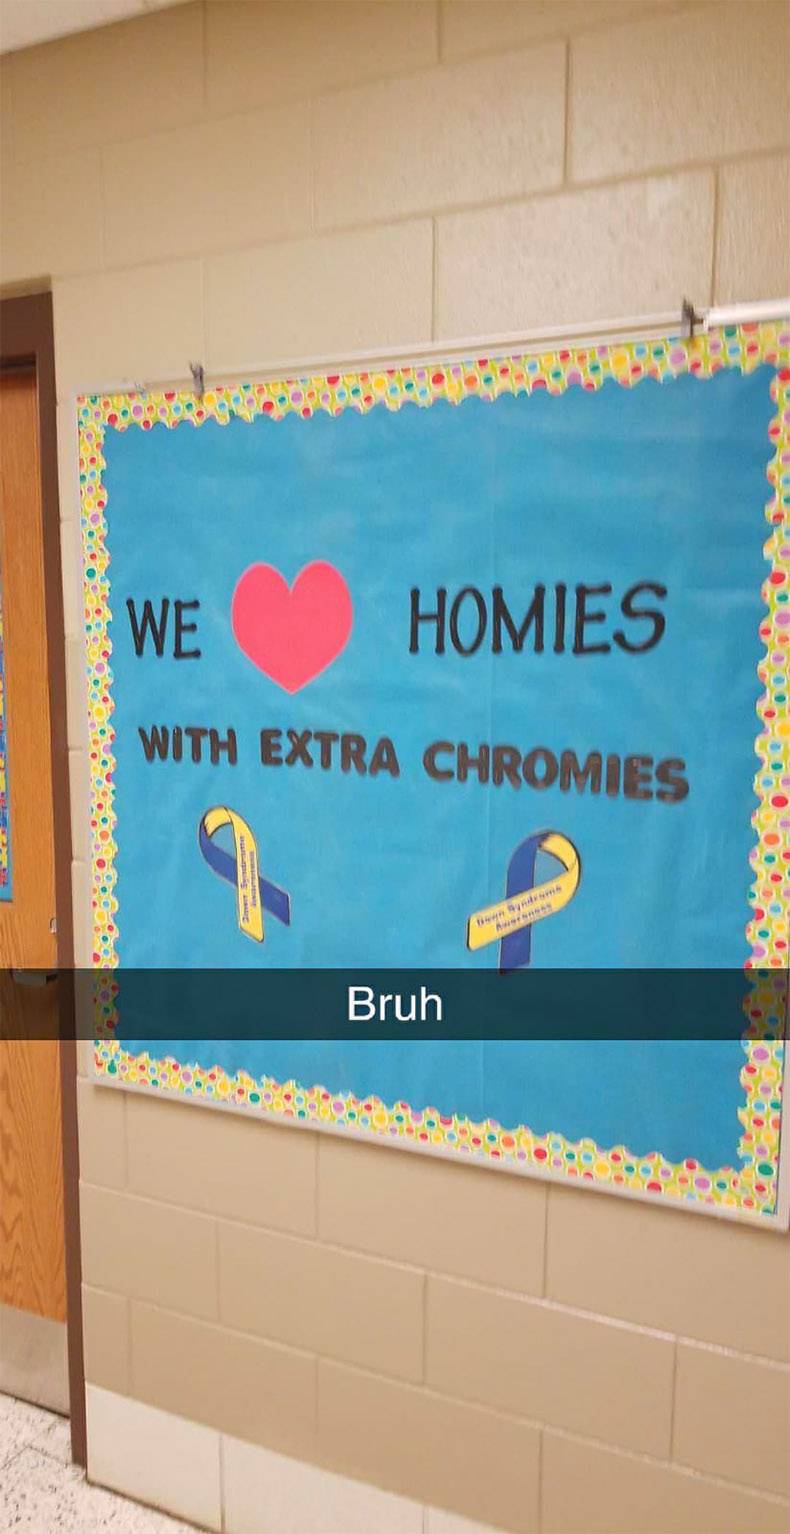 we heart our homies with extra chromies - Homies With Extra Chromies Nh The Bruh